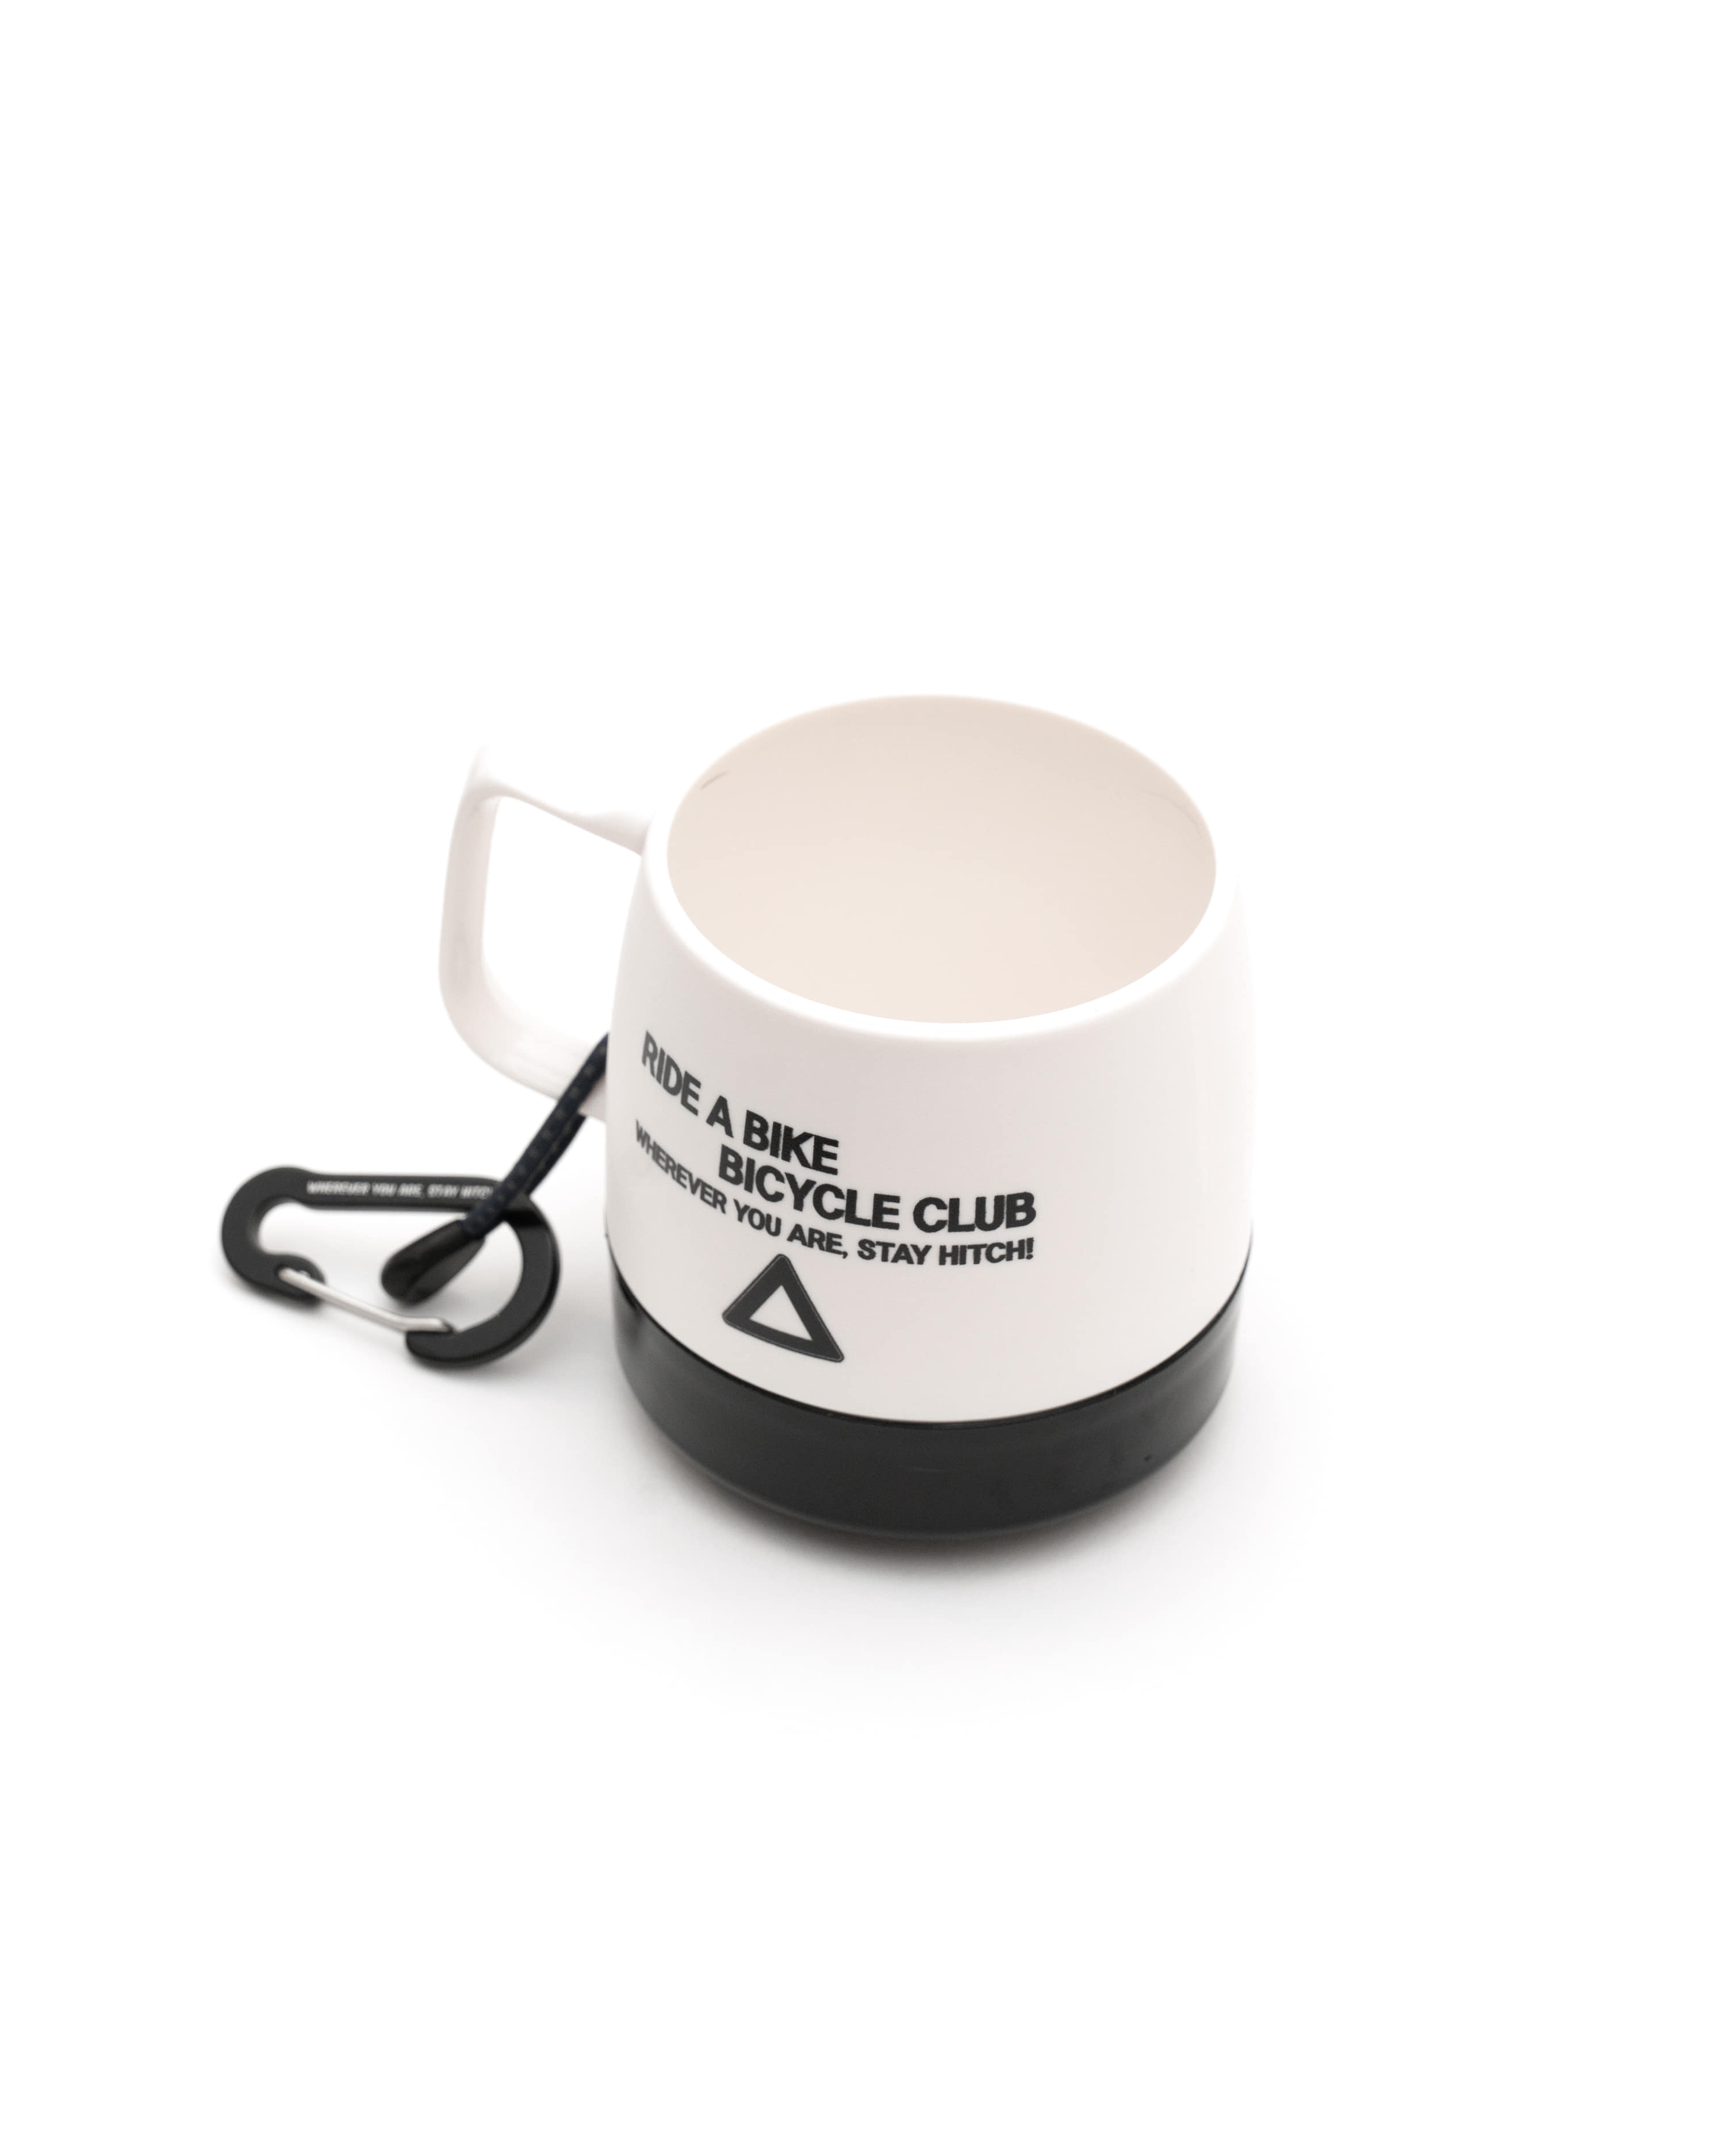 hitch x dinex 8oz mug - white/black